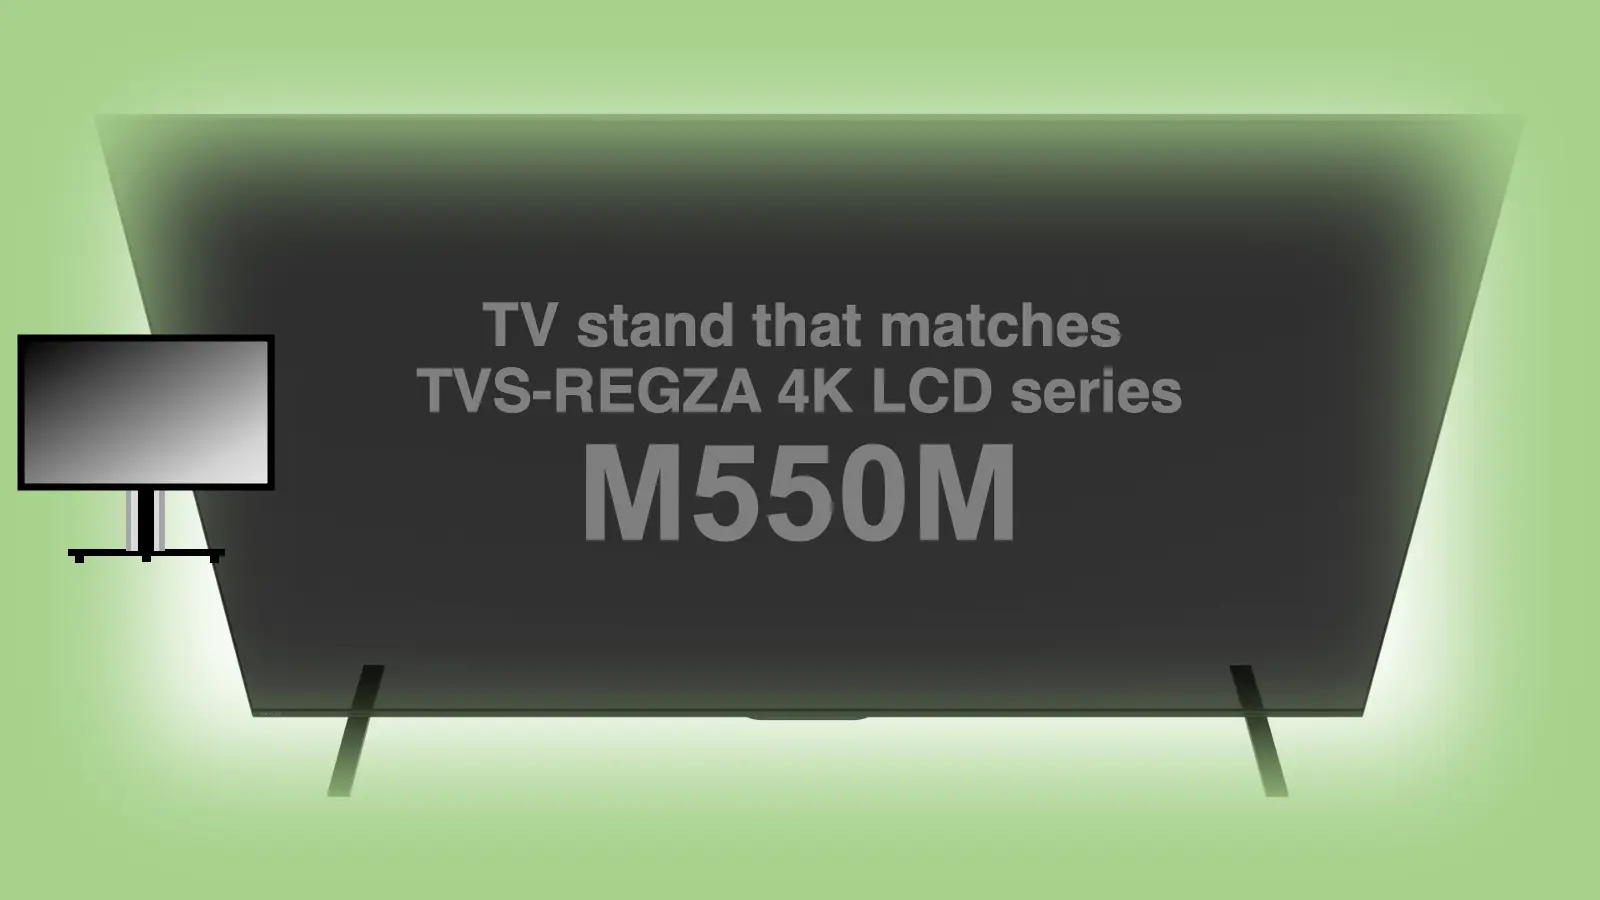 TVS REGZA(旧東芝) 4K液晶レグザ(REGZA) M550Mのレビュー記事用のオリジナルアイキャッチ画像。